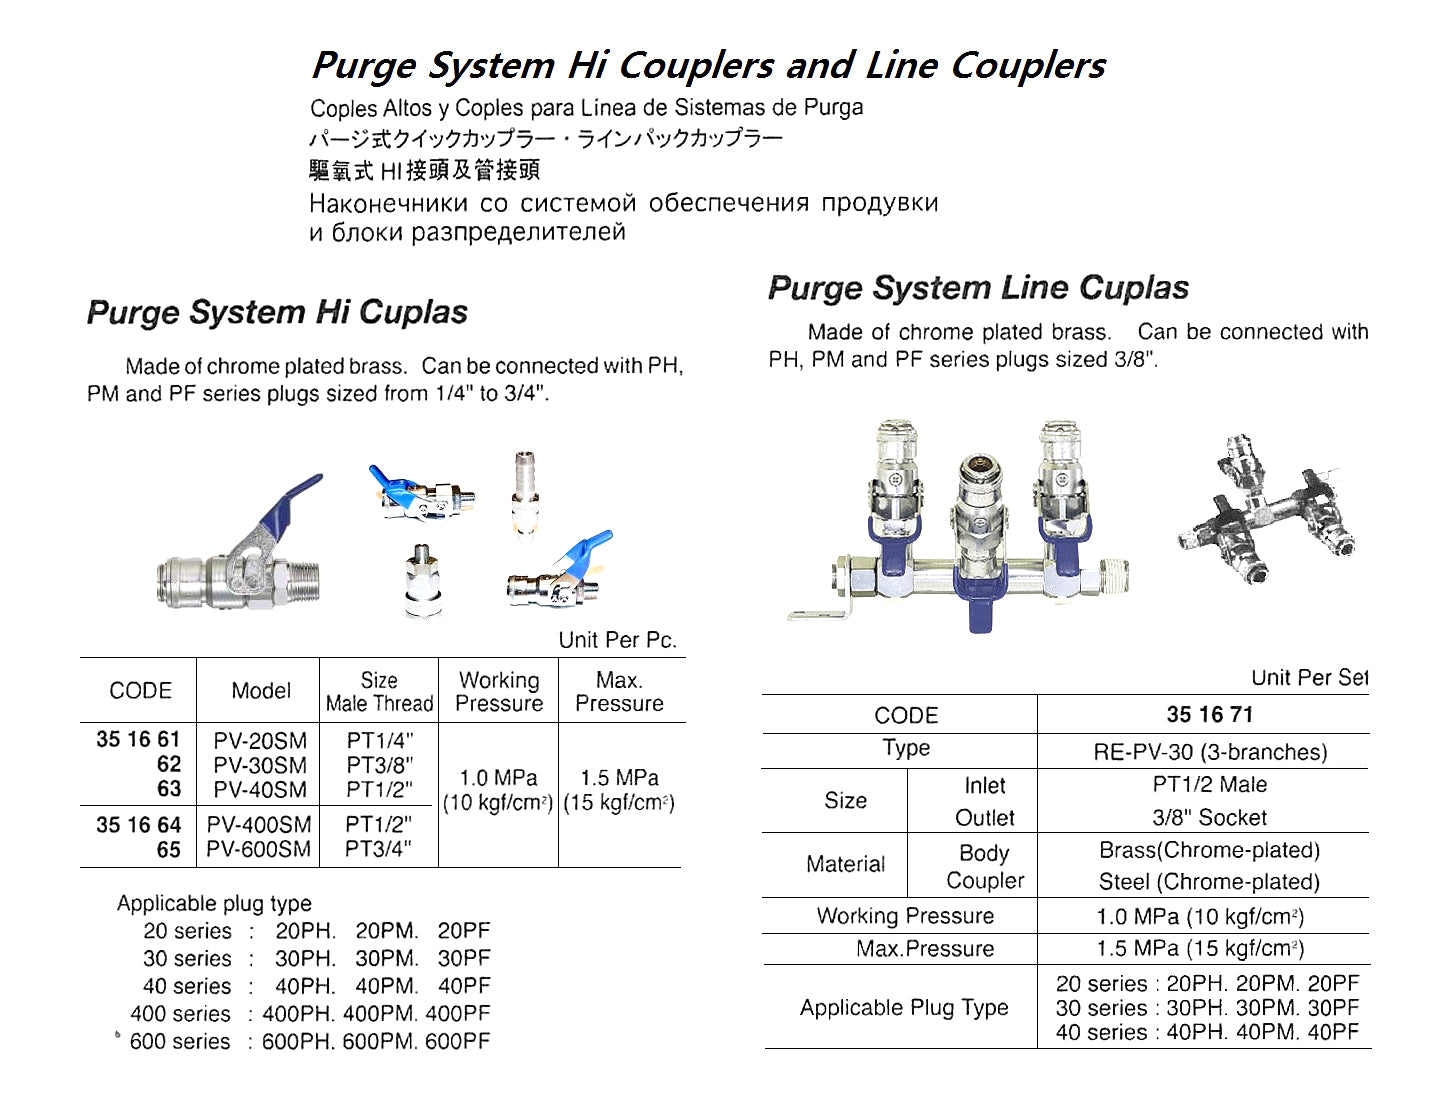 351663-HI COUPLER PURGE SYSTEM, PV-40SM MALE R1/2?